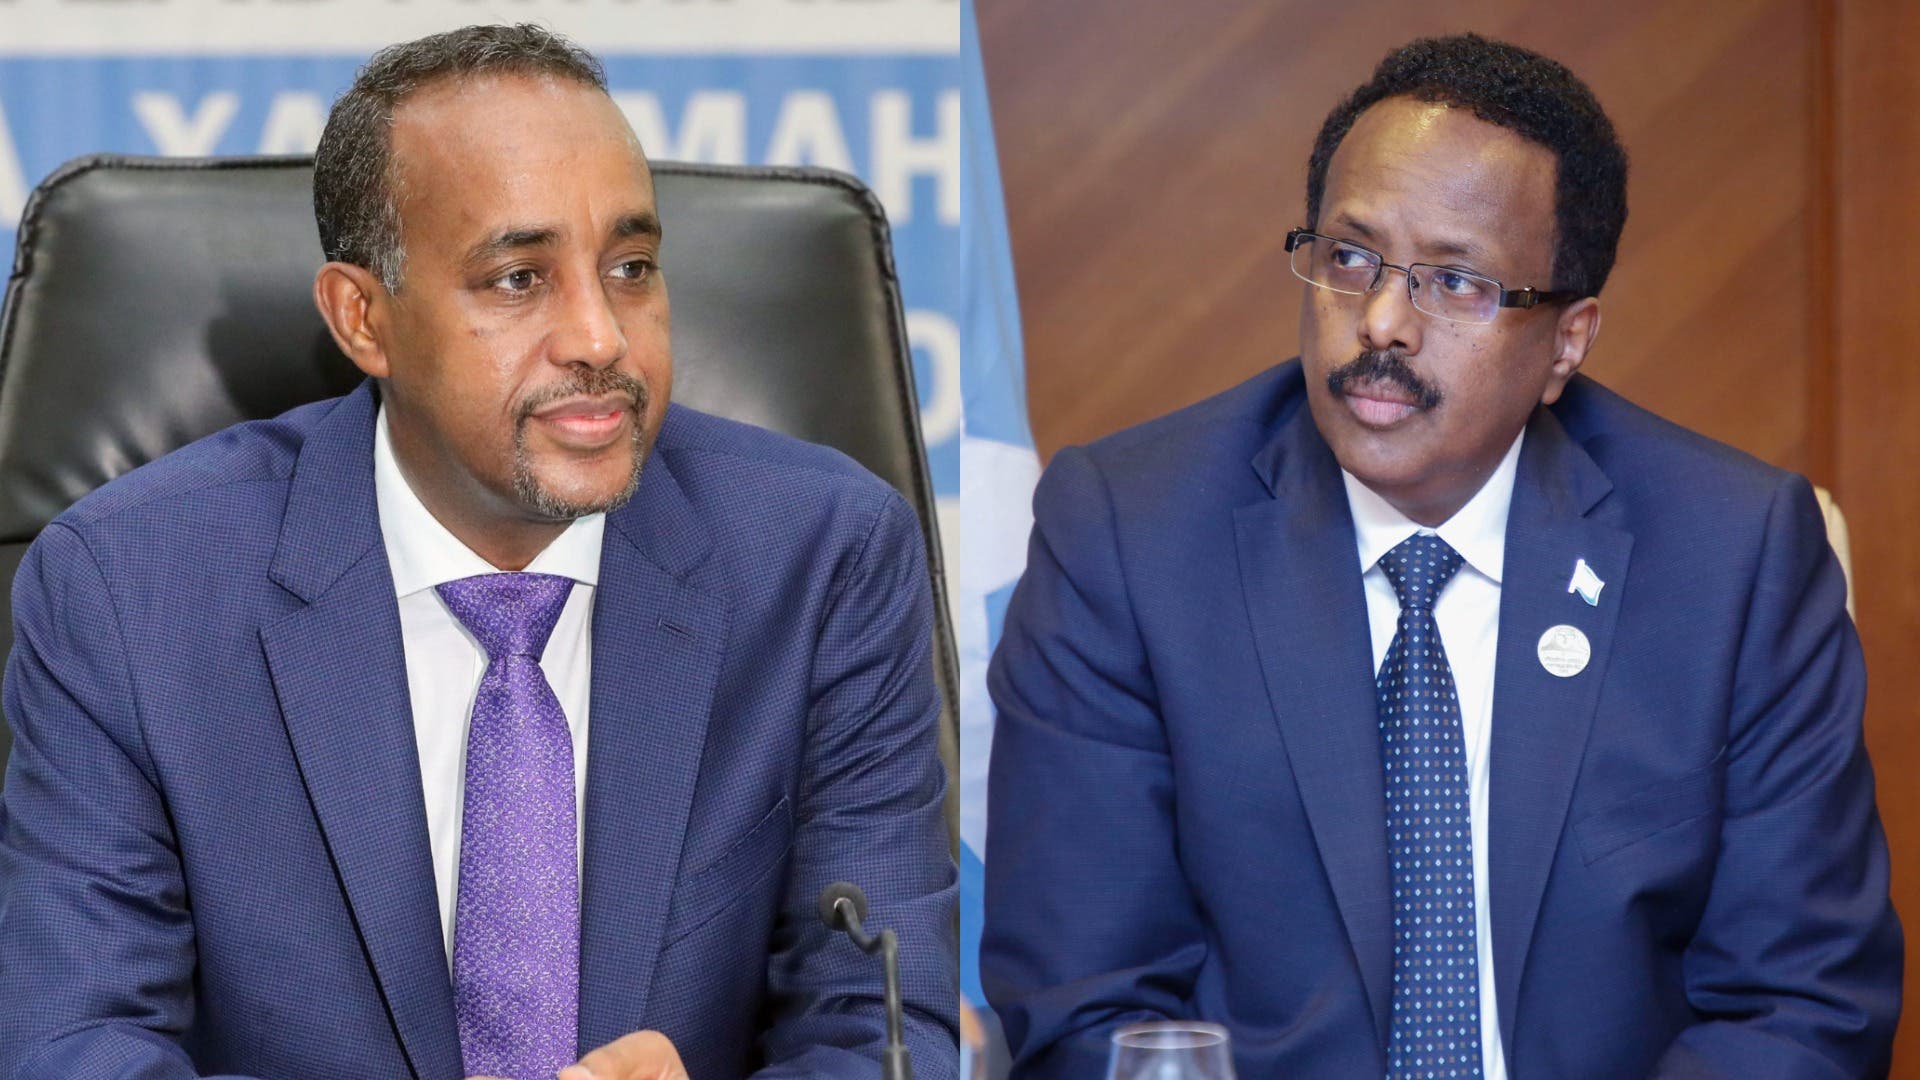 Somalia’s allies fear instability as political crisis deepens